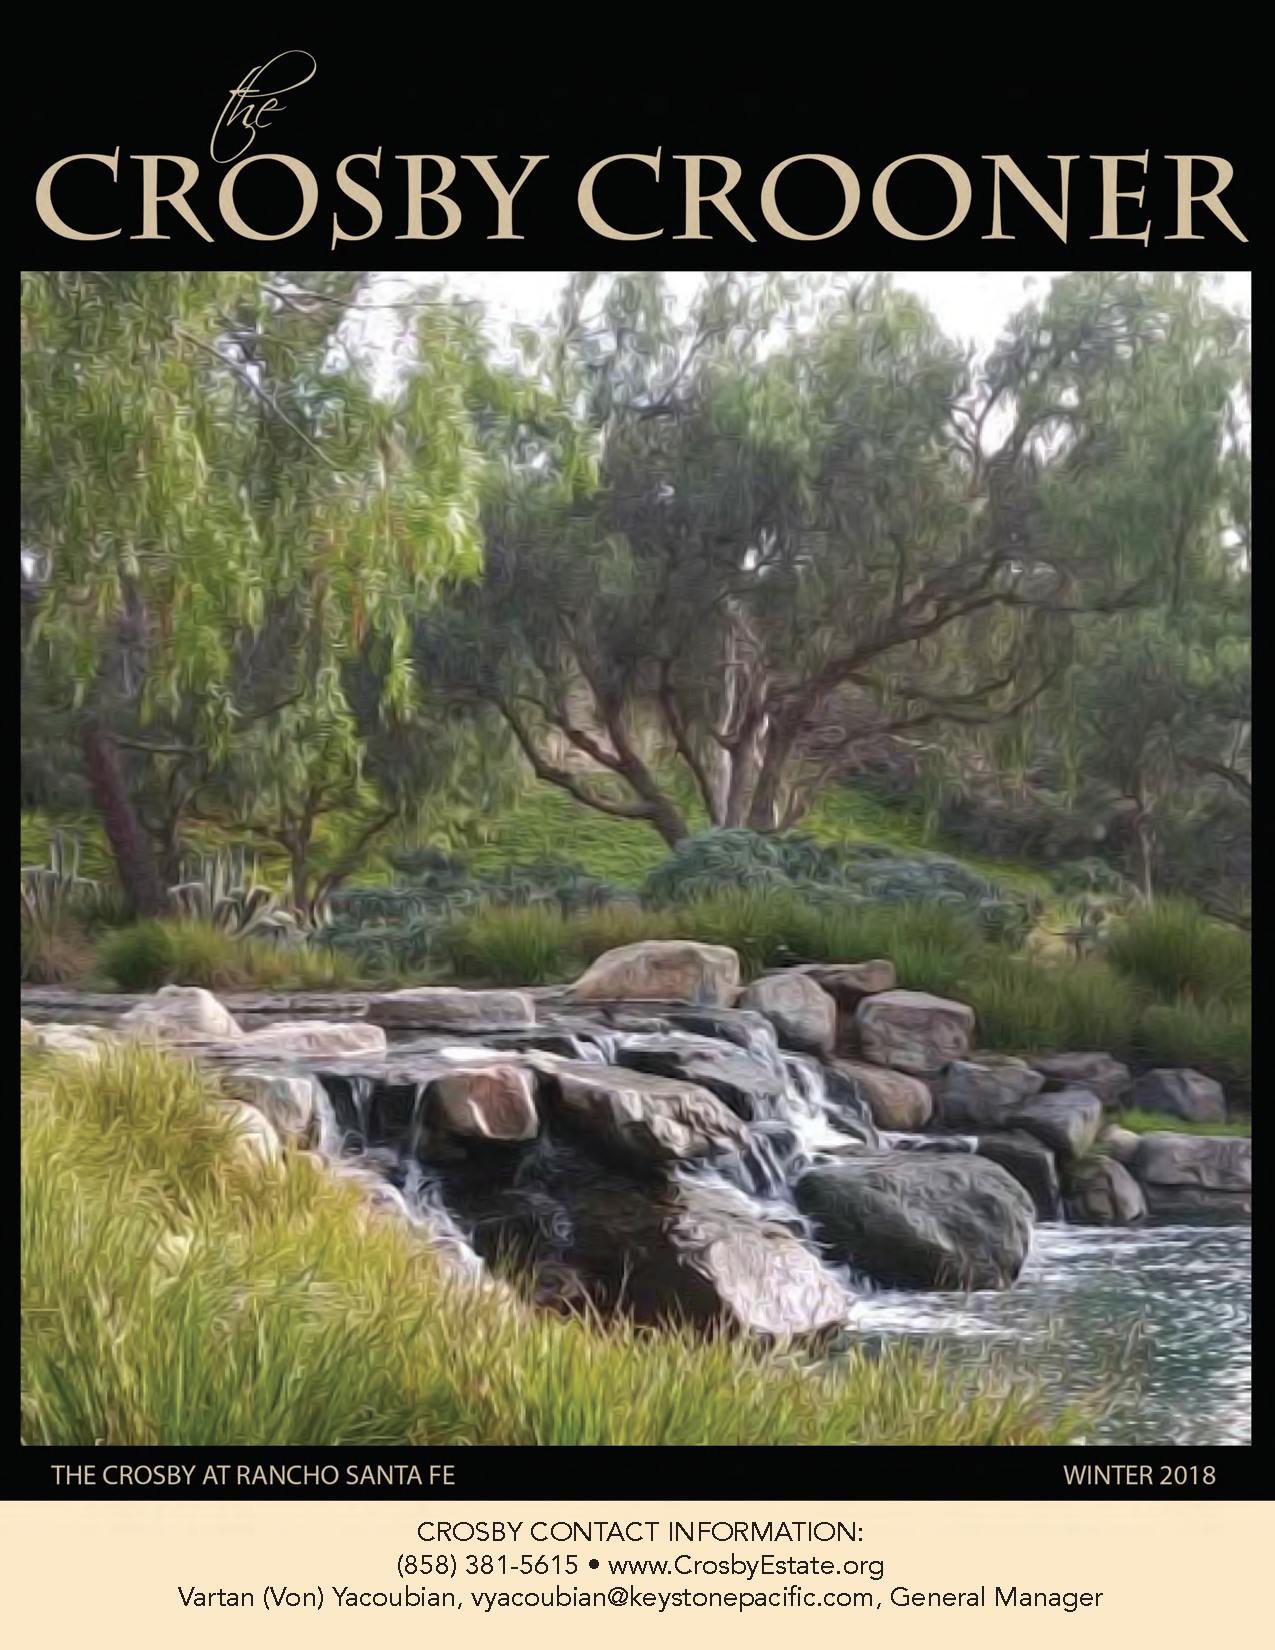 Winter 2018 Crosby Crooner Cover